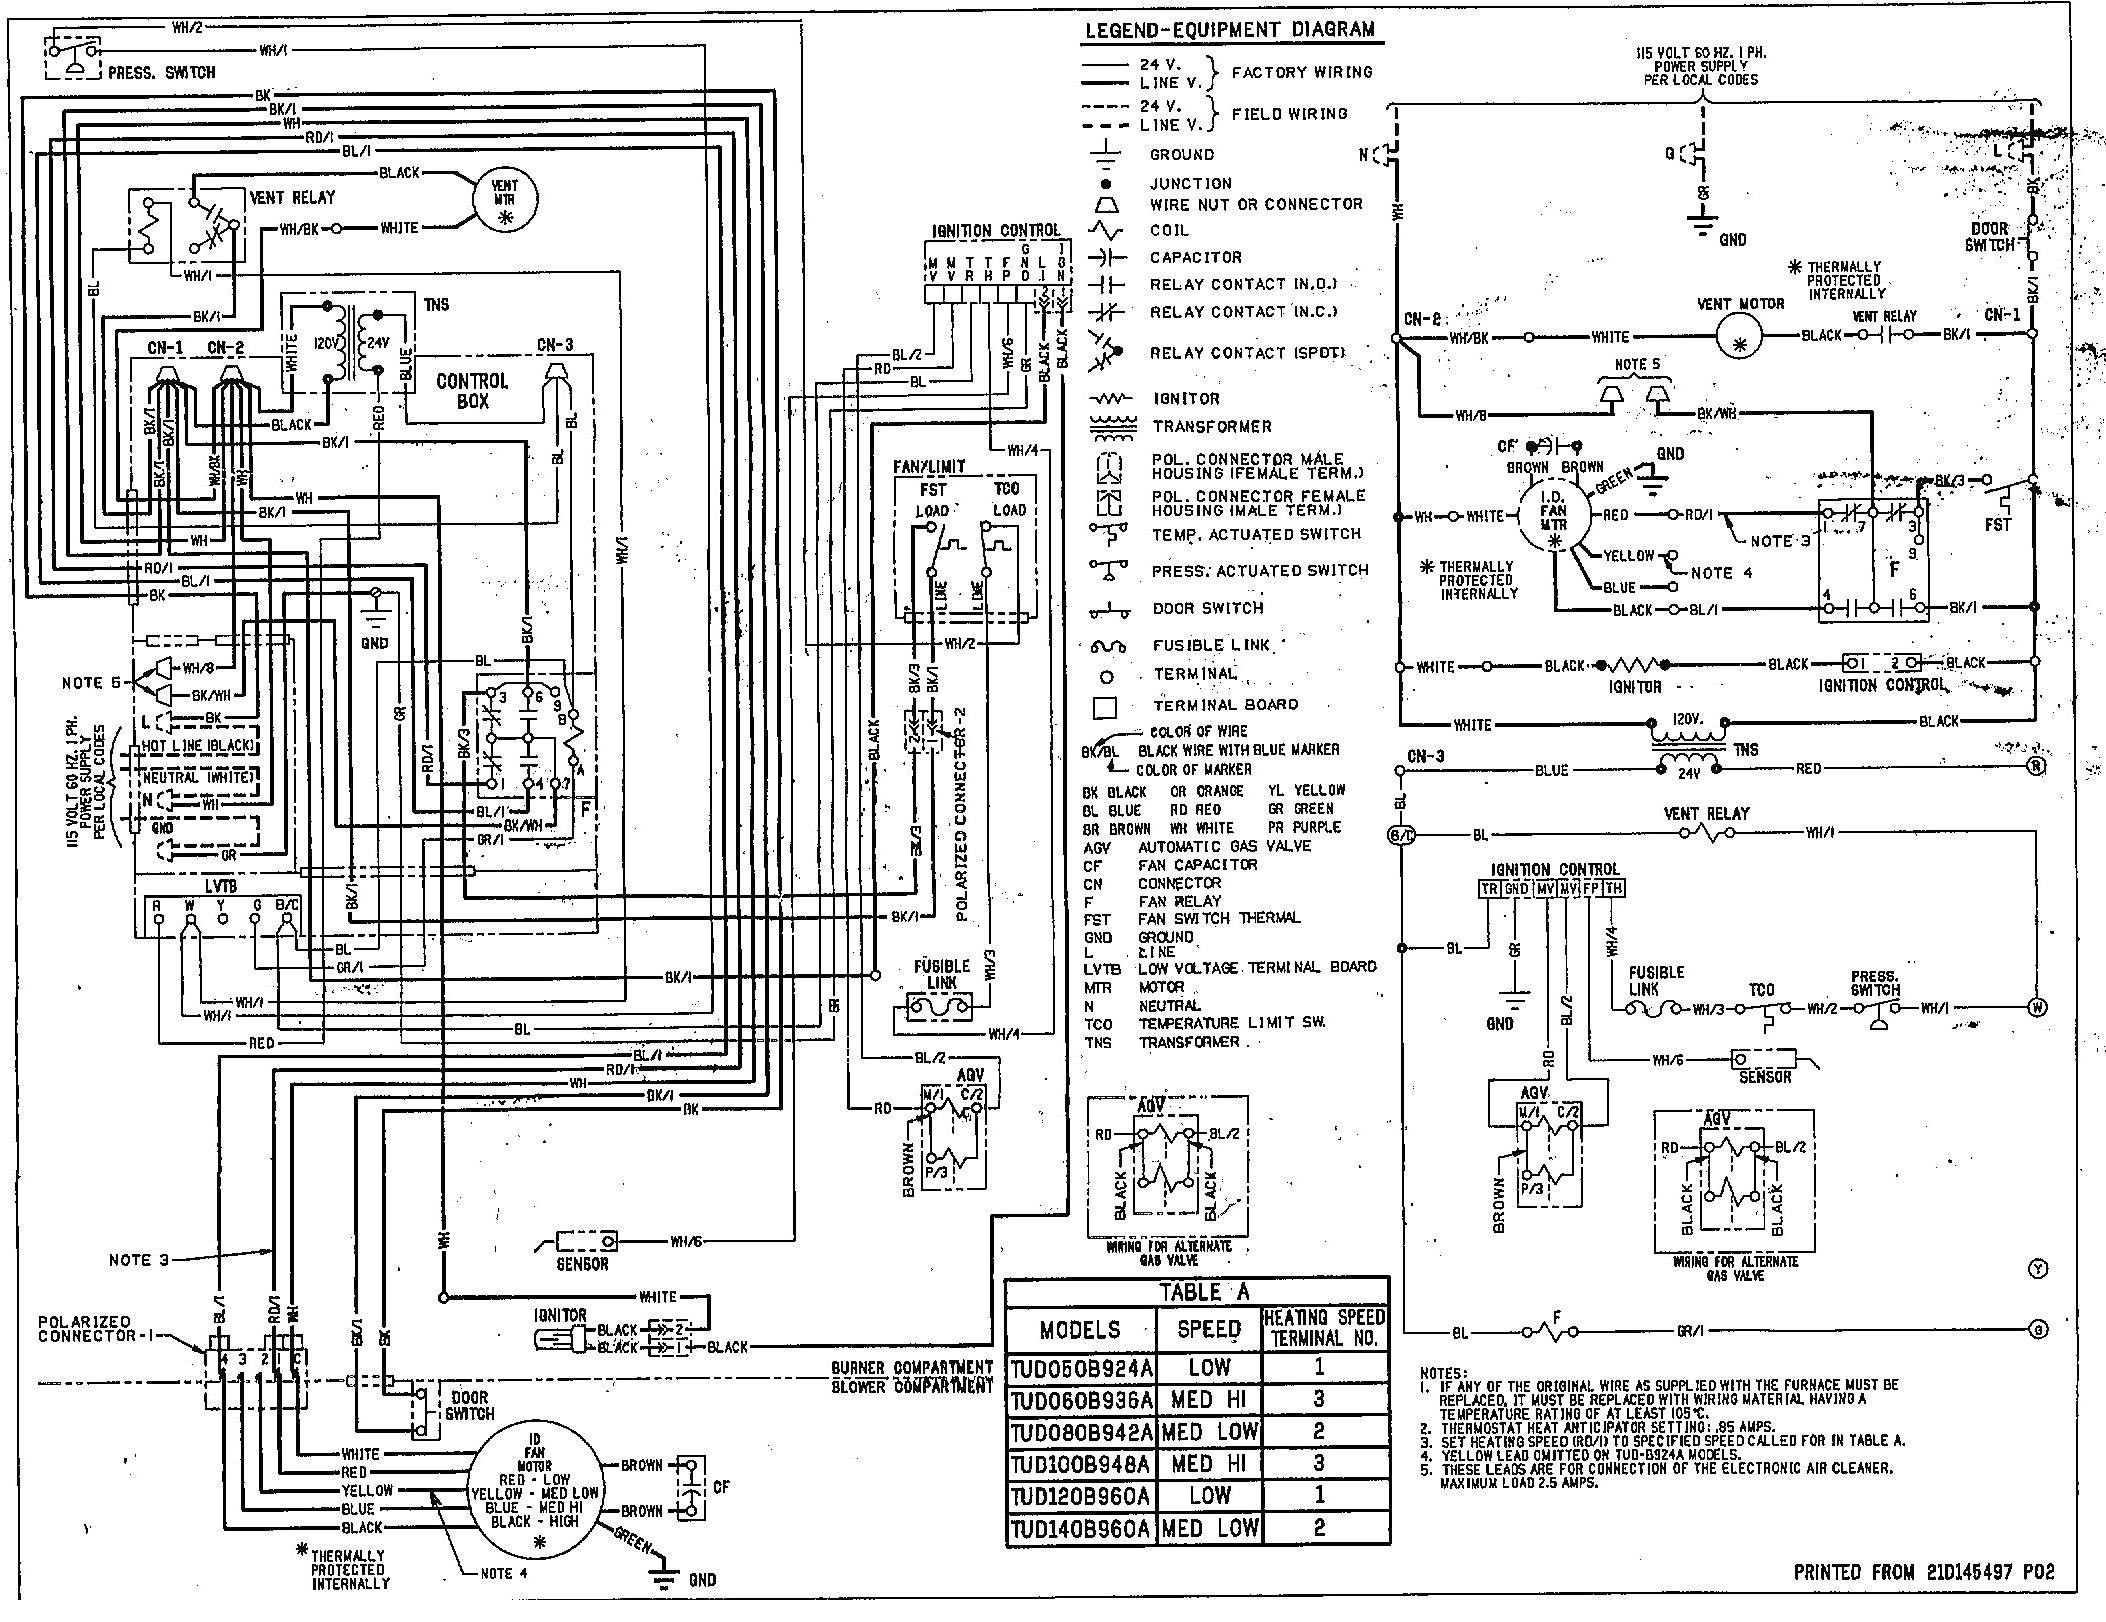 Wiring Diagram for Trane Air Conditioner Trane Air Conditioner Wiring Diagram Wiring Of Wiring Diagram for Trane Air Conditioner